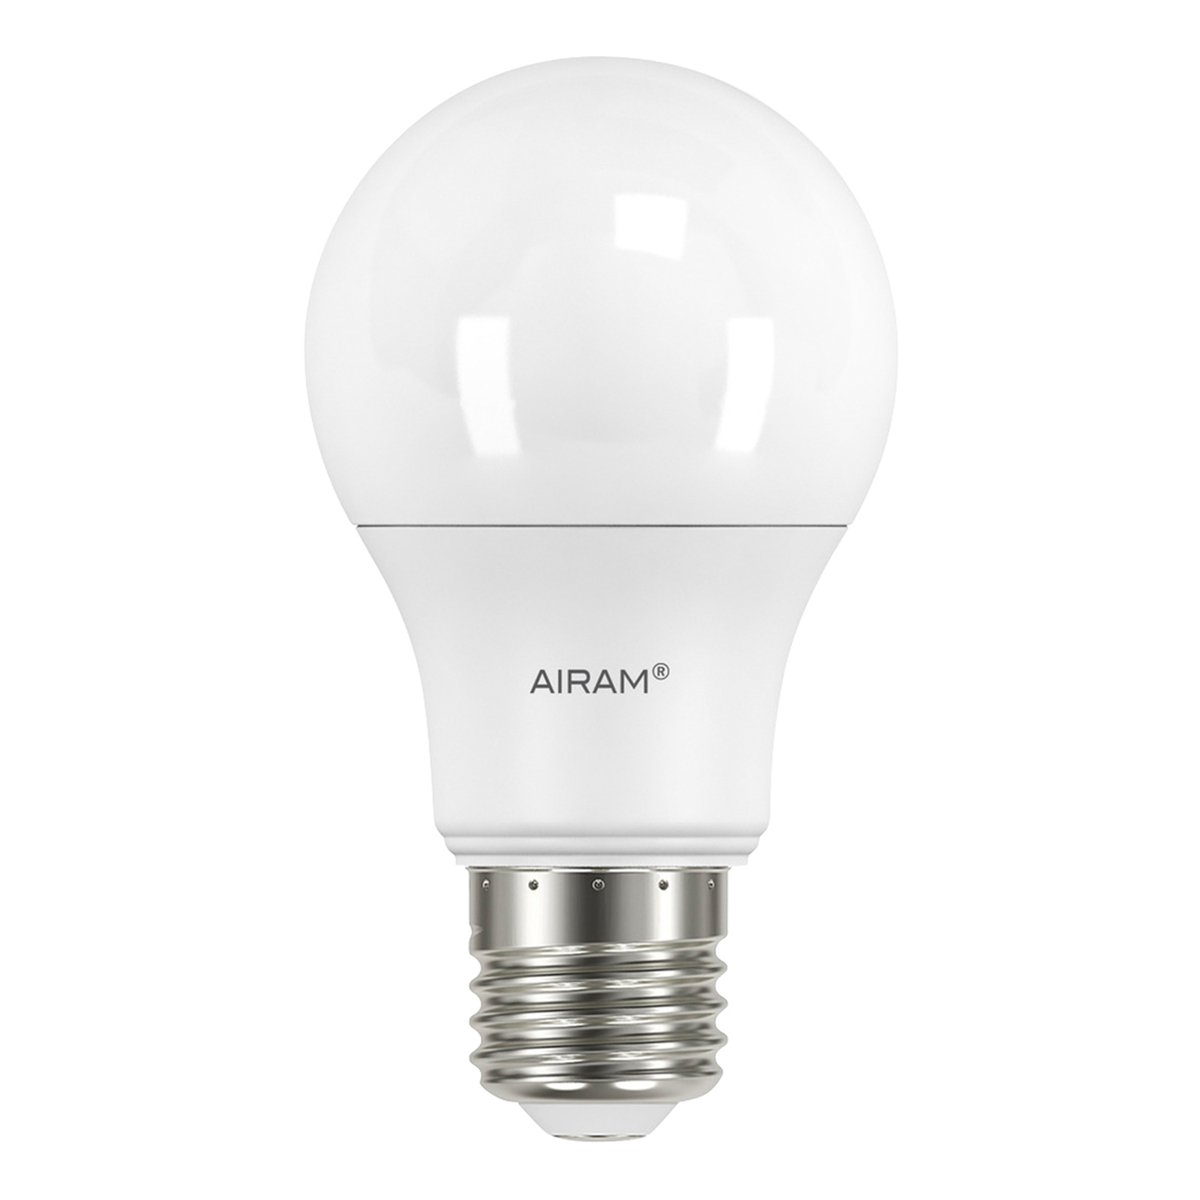 Airam standard bulb E27 | Design Shop